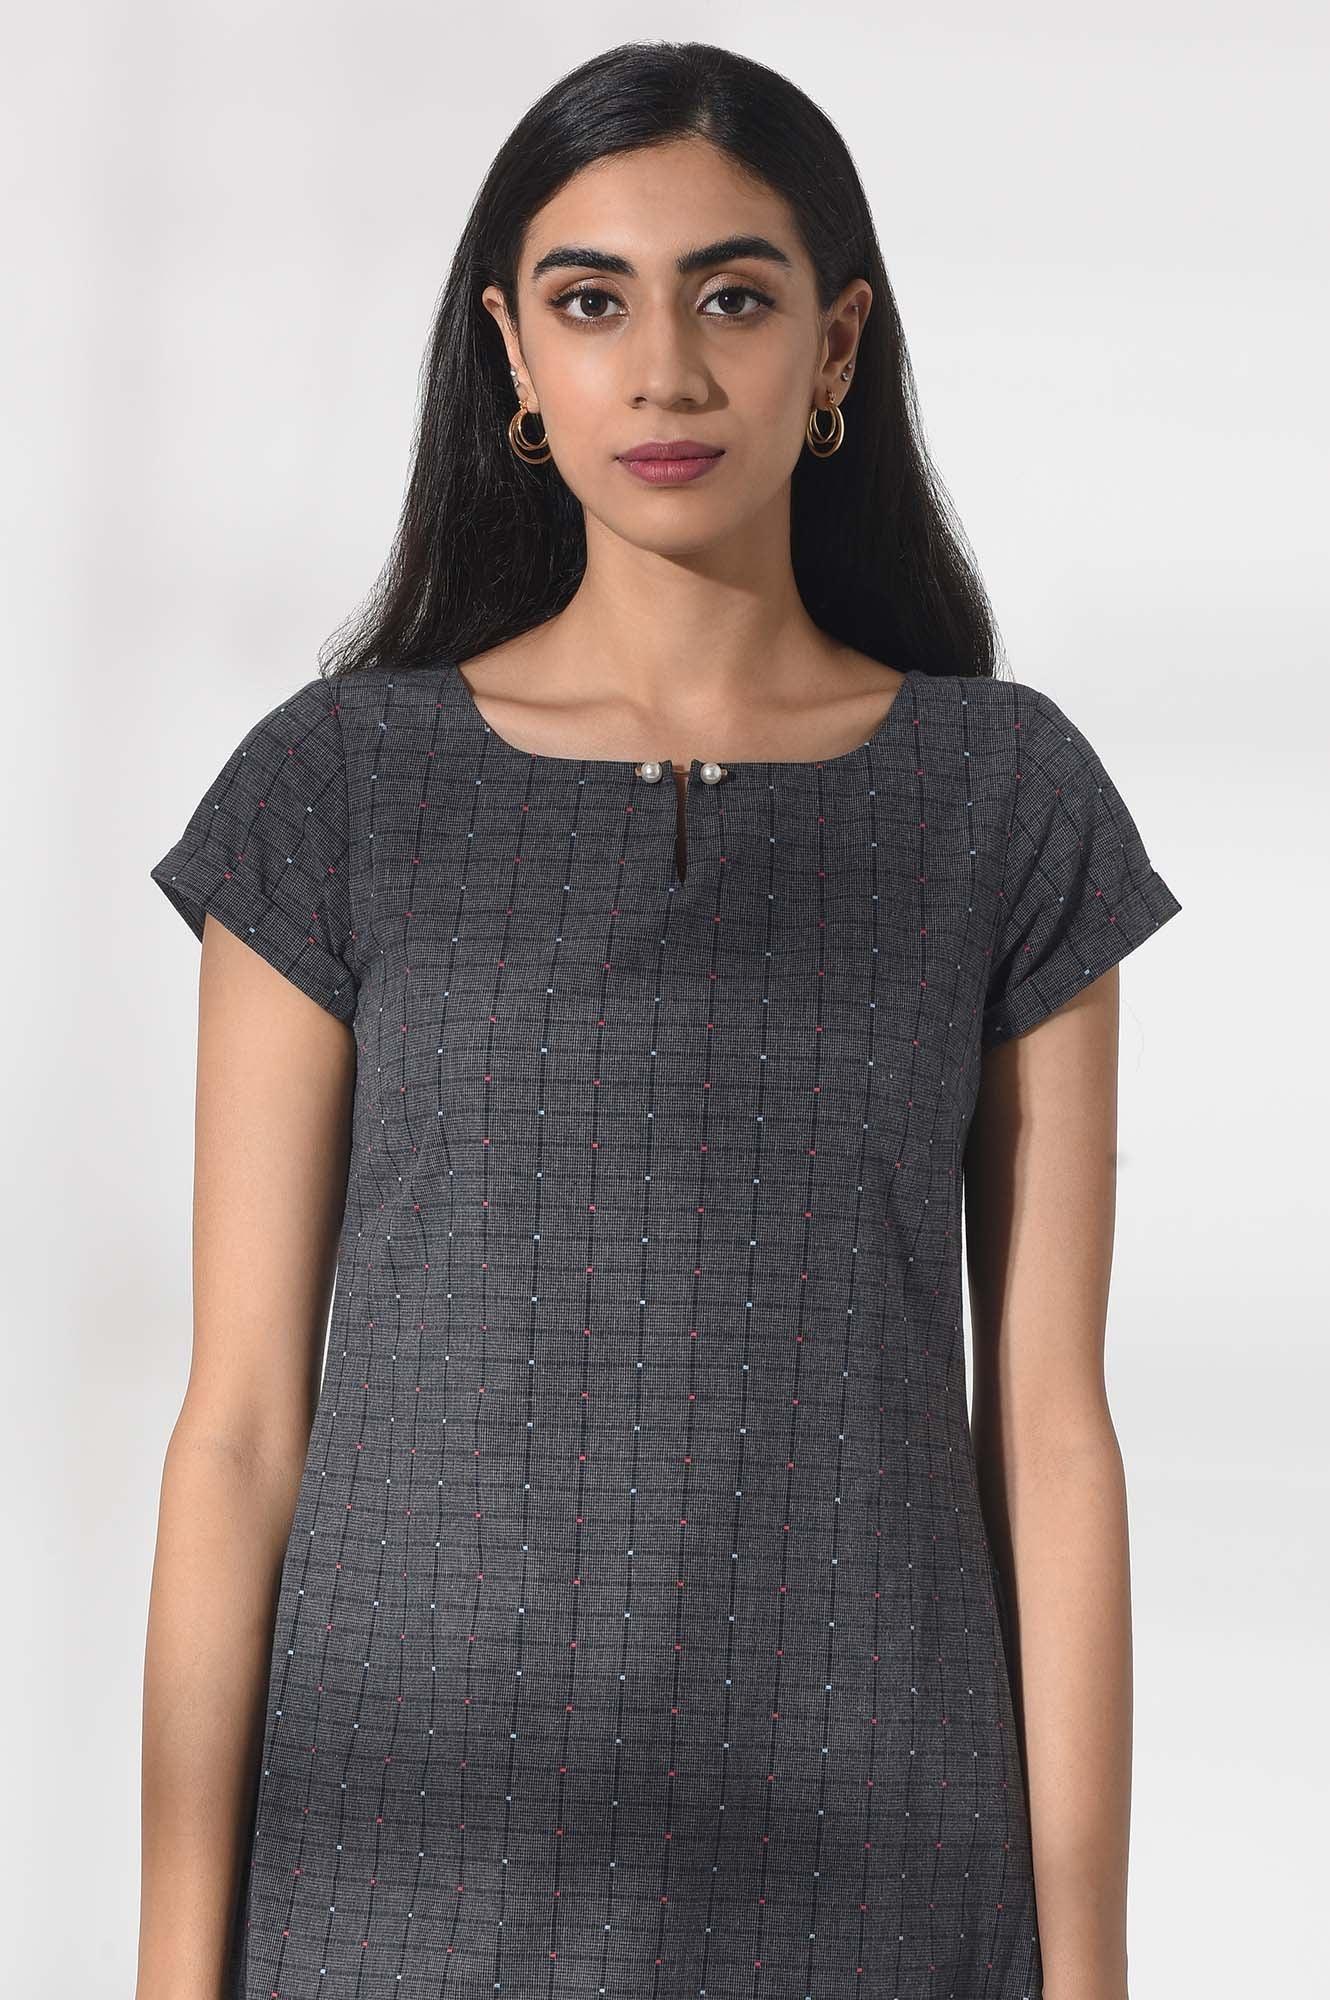 Dark Grey Sheath Dress with Embroidery - wforwoman